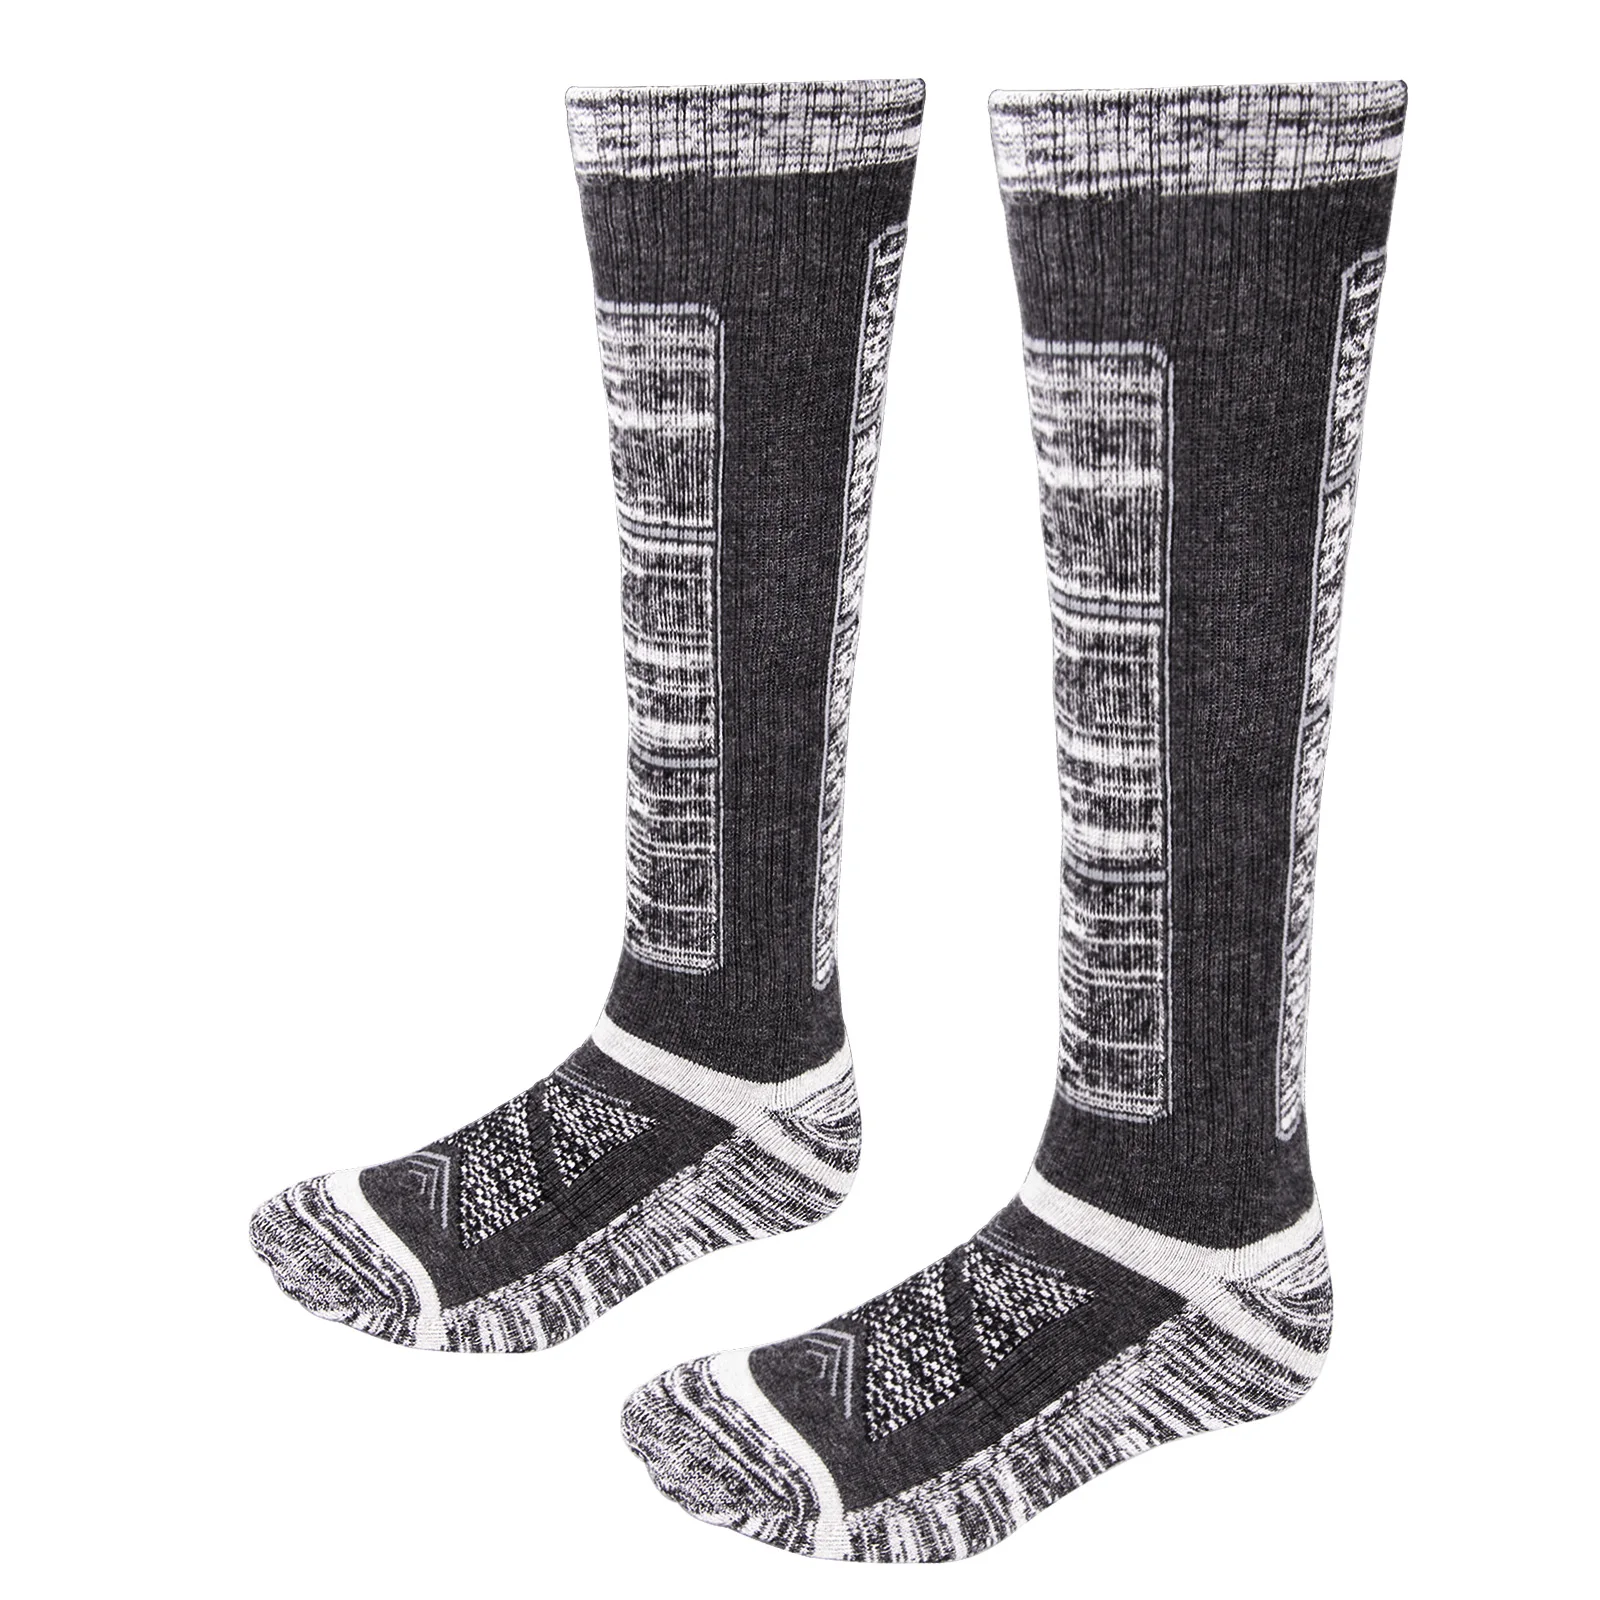 YUEDGE Merino Wool Ski Socks, Cold Weather Socks for Snowboarding, Snow, Winter, Thermal Knee-high Warm Socks, Hunting, Outdoor